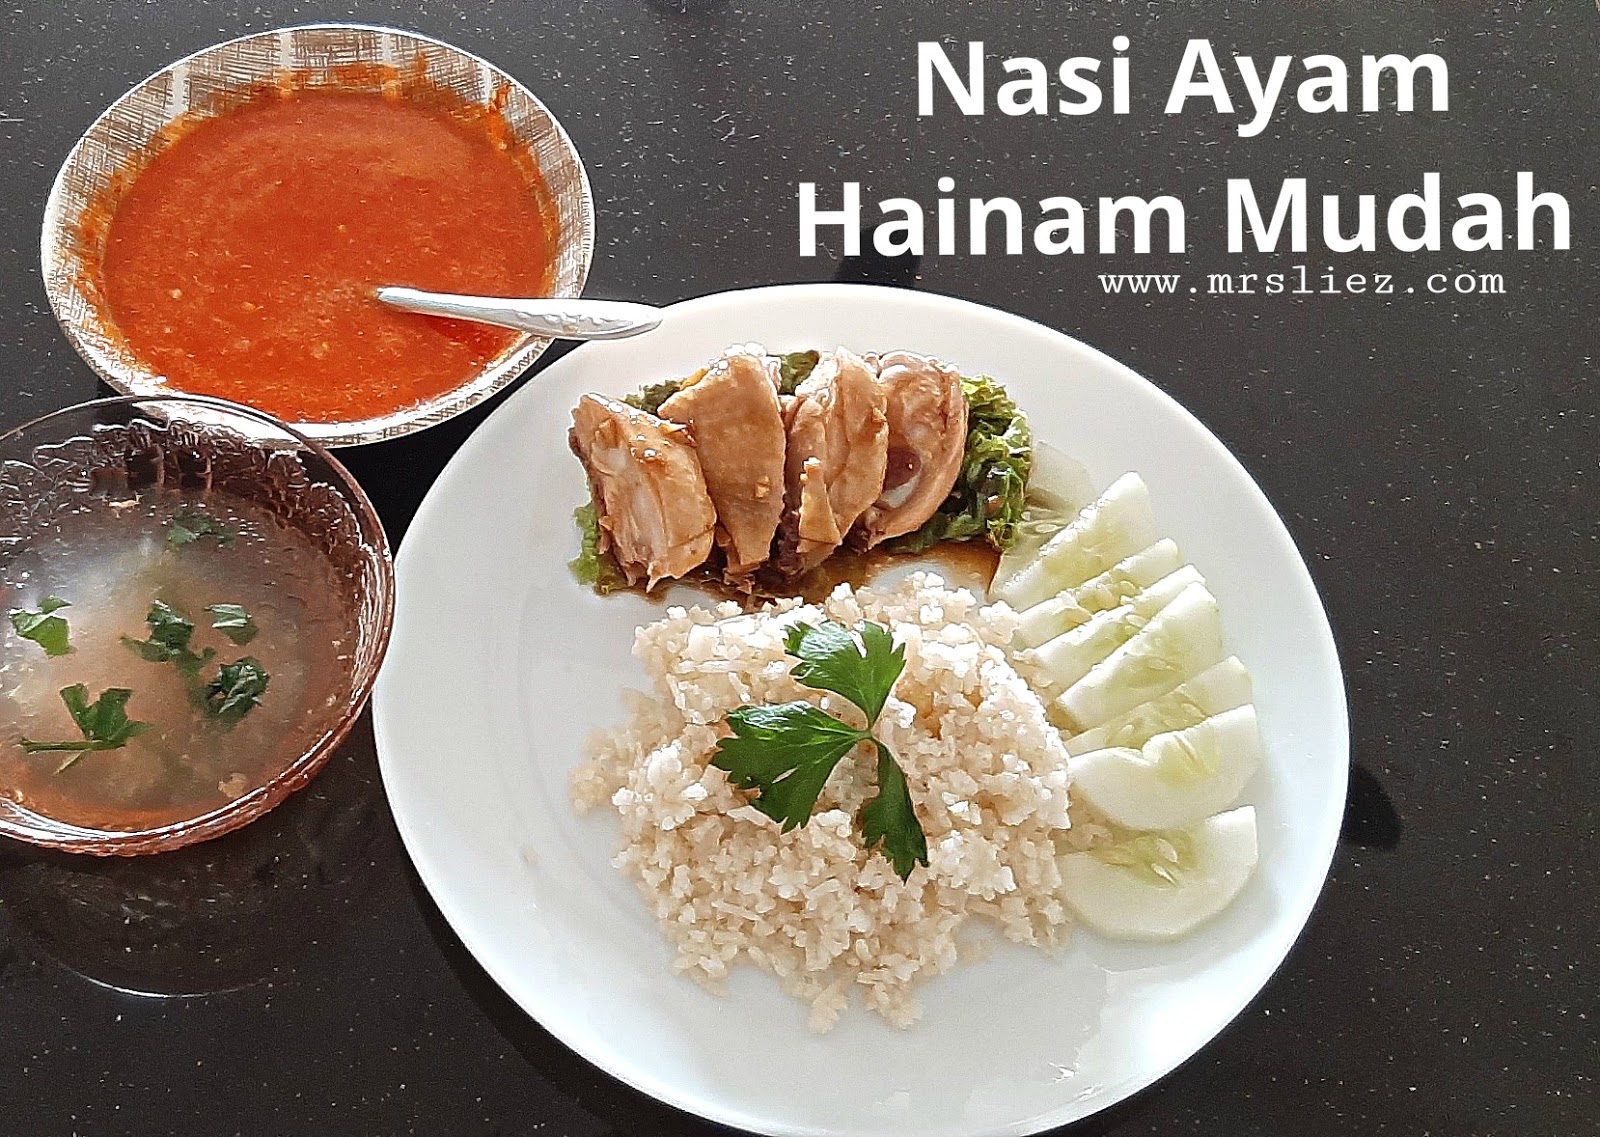 Resepi Mudah Nasi Ayam Hainan - www.mrsliez.com